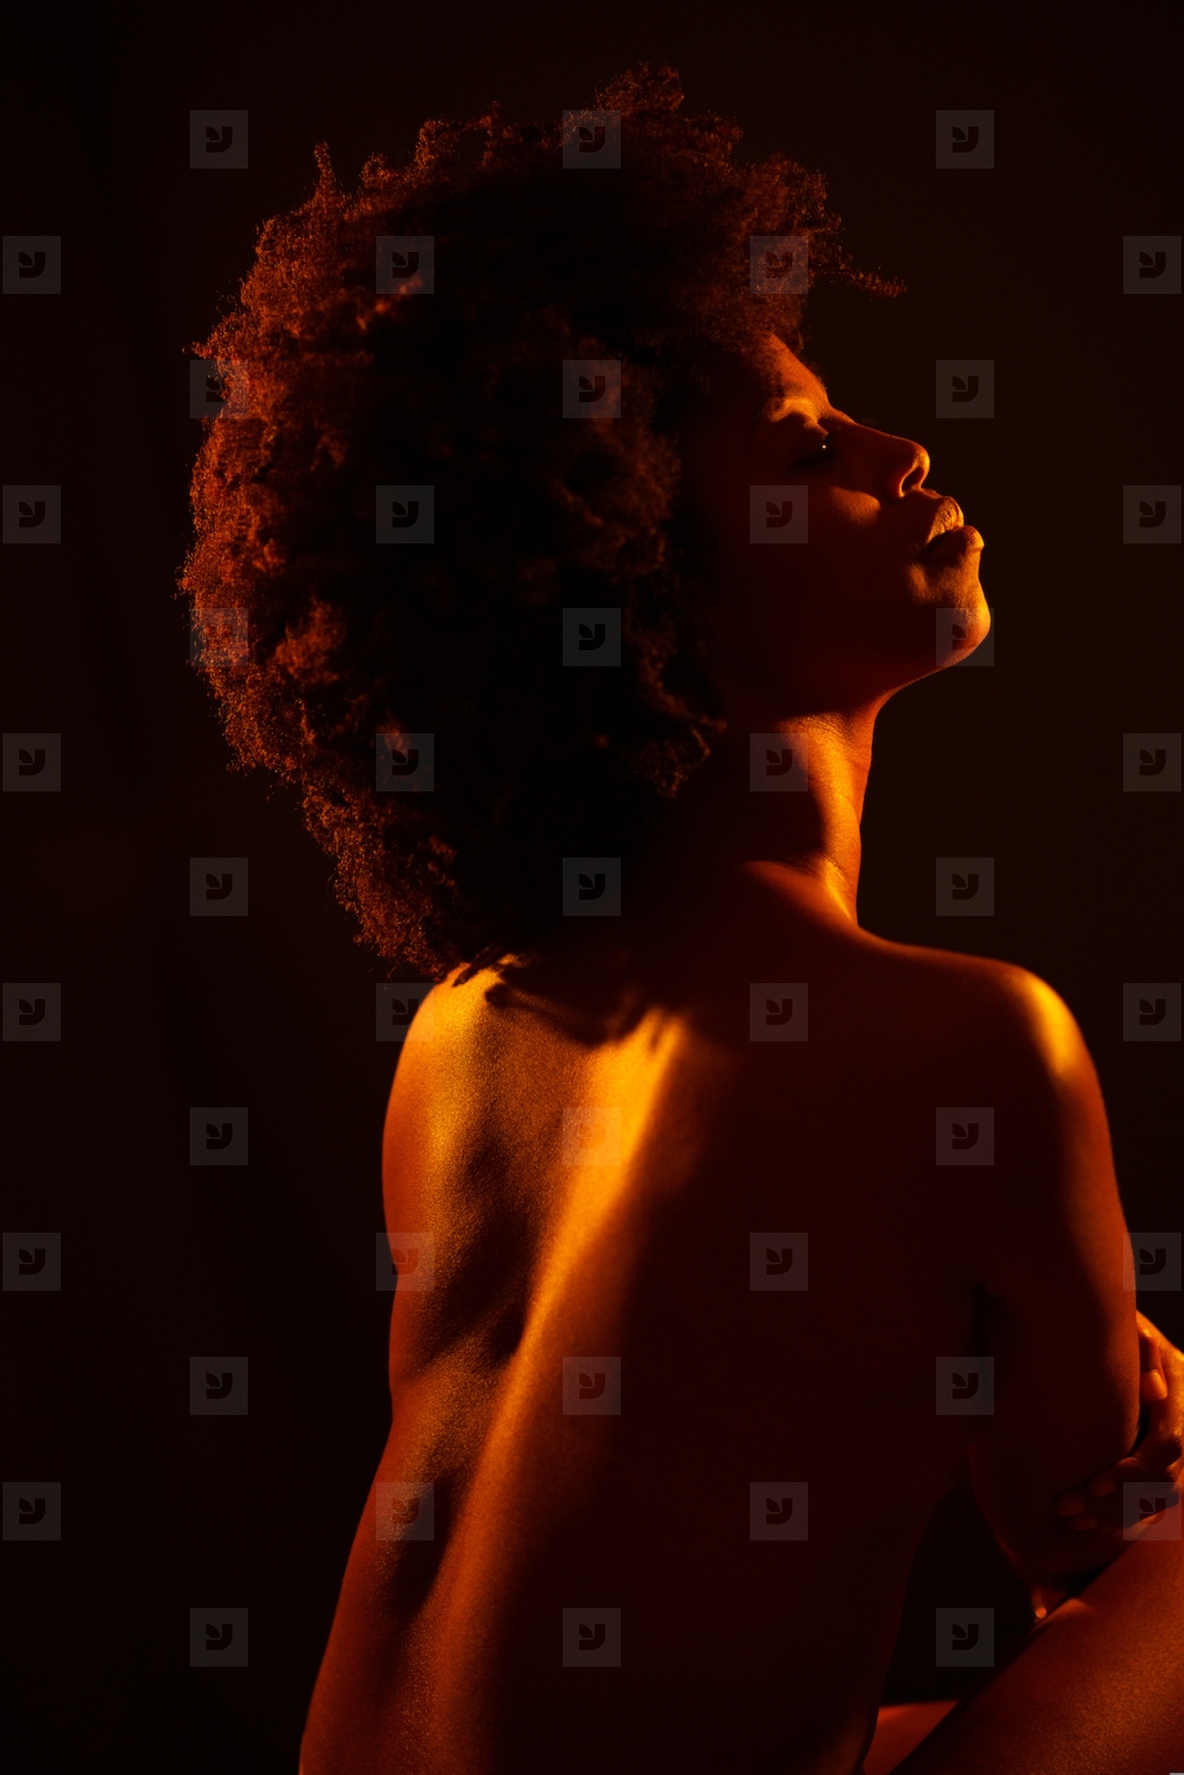 Calm black woman embracing naked torso